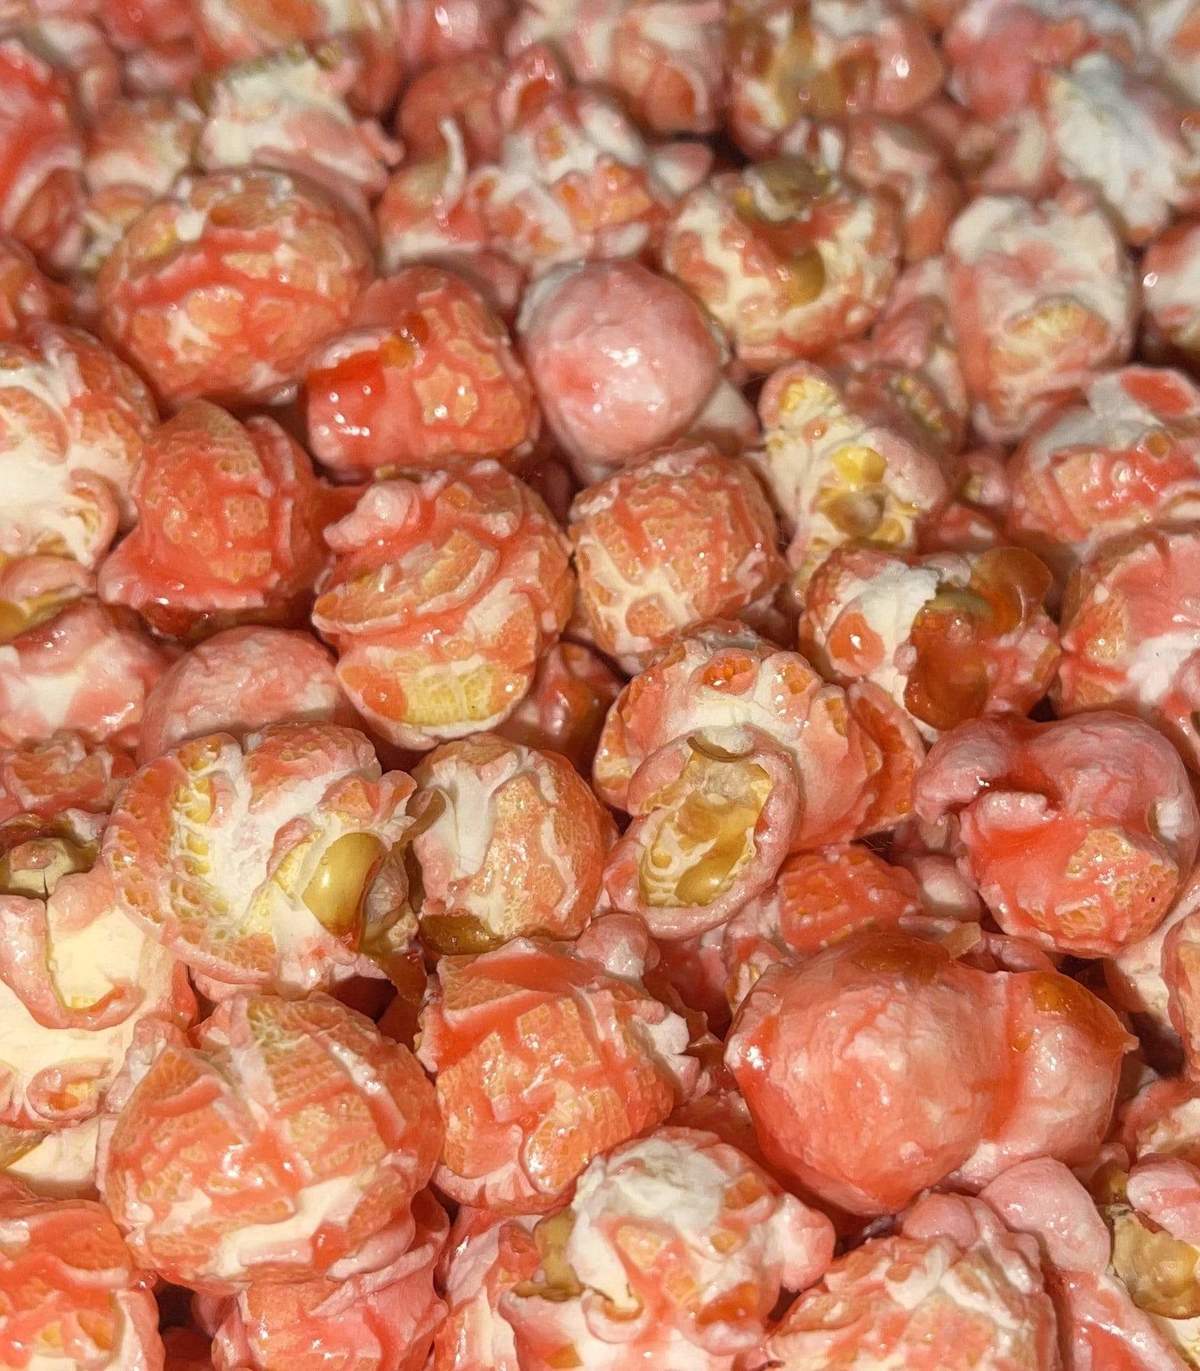 SPC014 - Bulk Pink Popcorn - Sweet Gourmet Popcorn - 10kg Bag in Box **NEW**